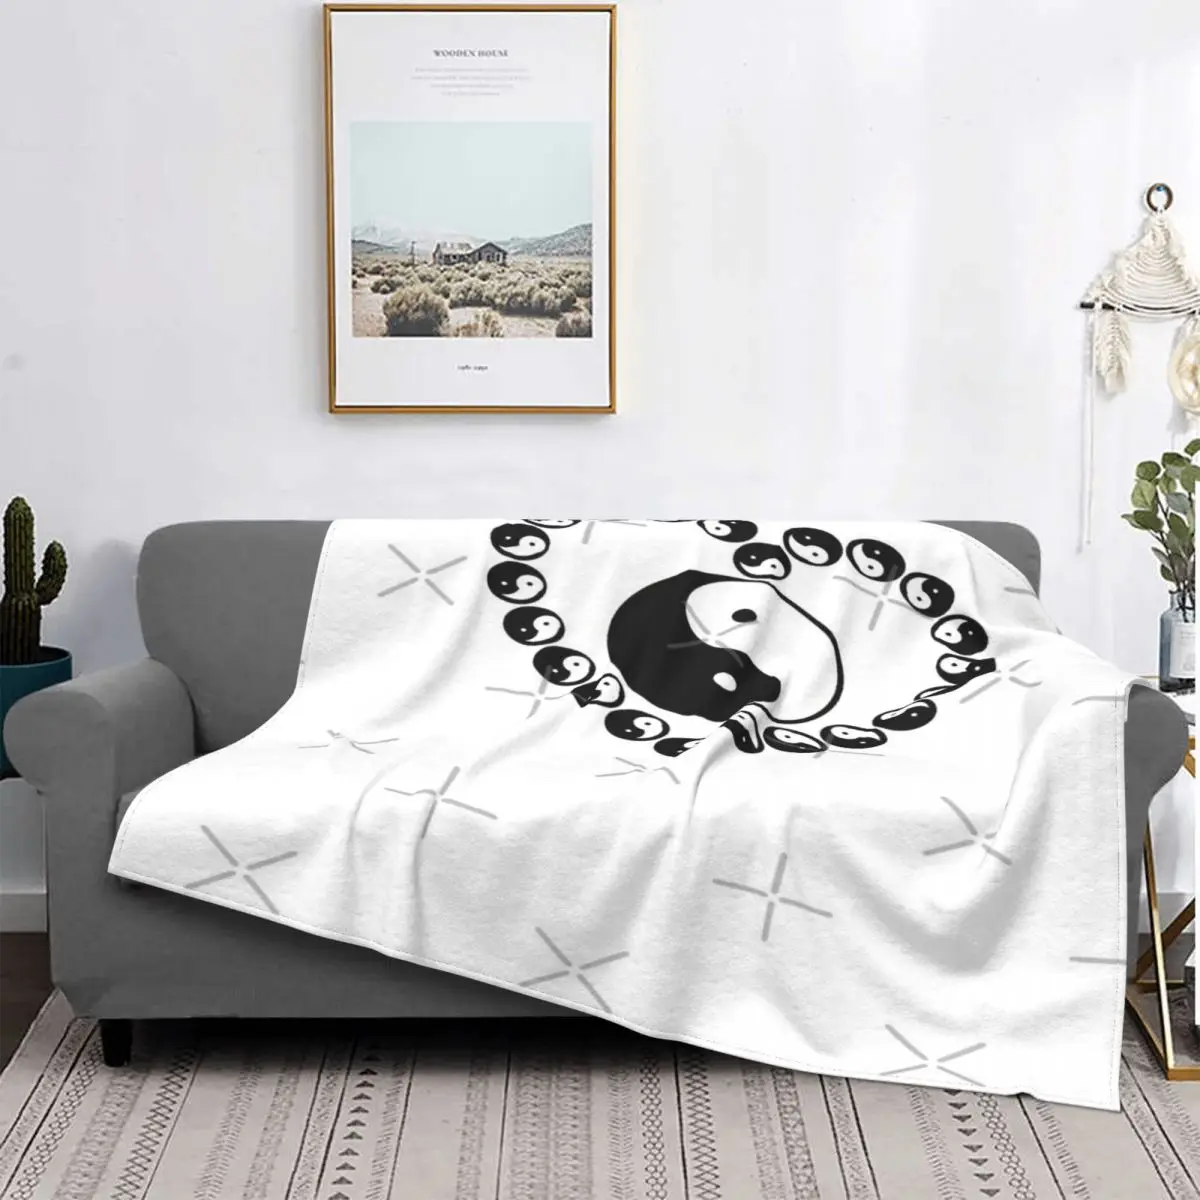 

Yin Yang meaving-Manta de amor, a cuadros para cama colcha, toalla de playa, Sudadera con capucha, manta, colchas de verano